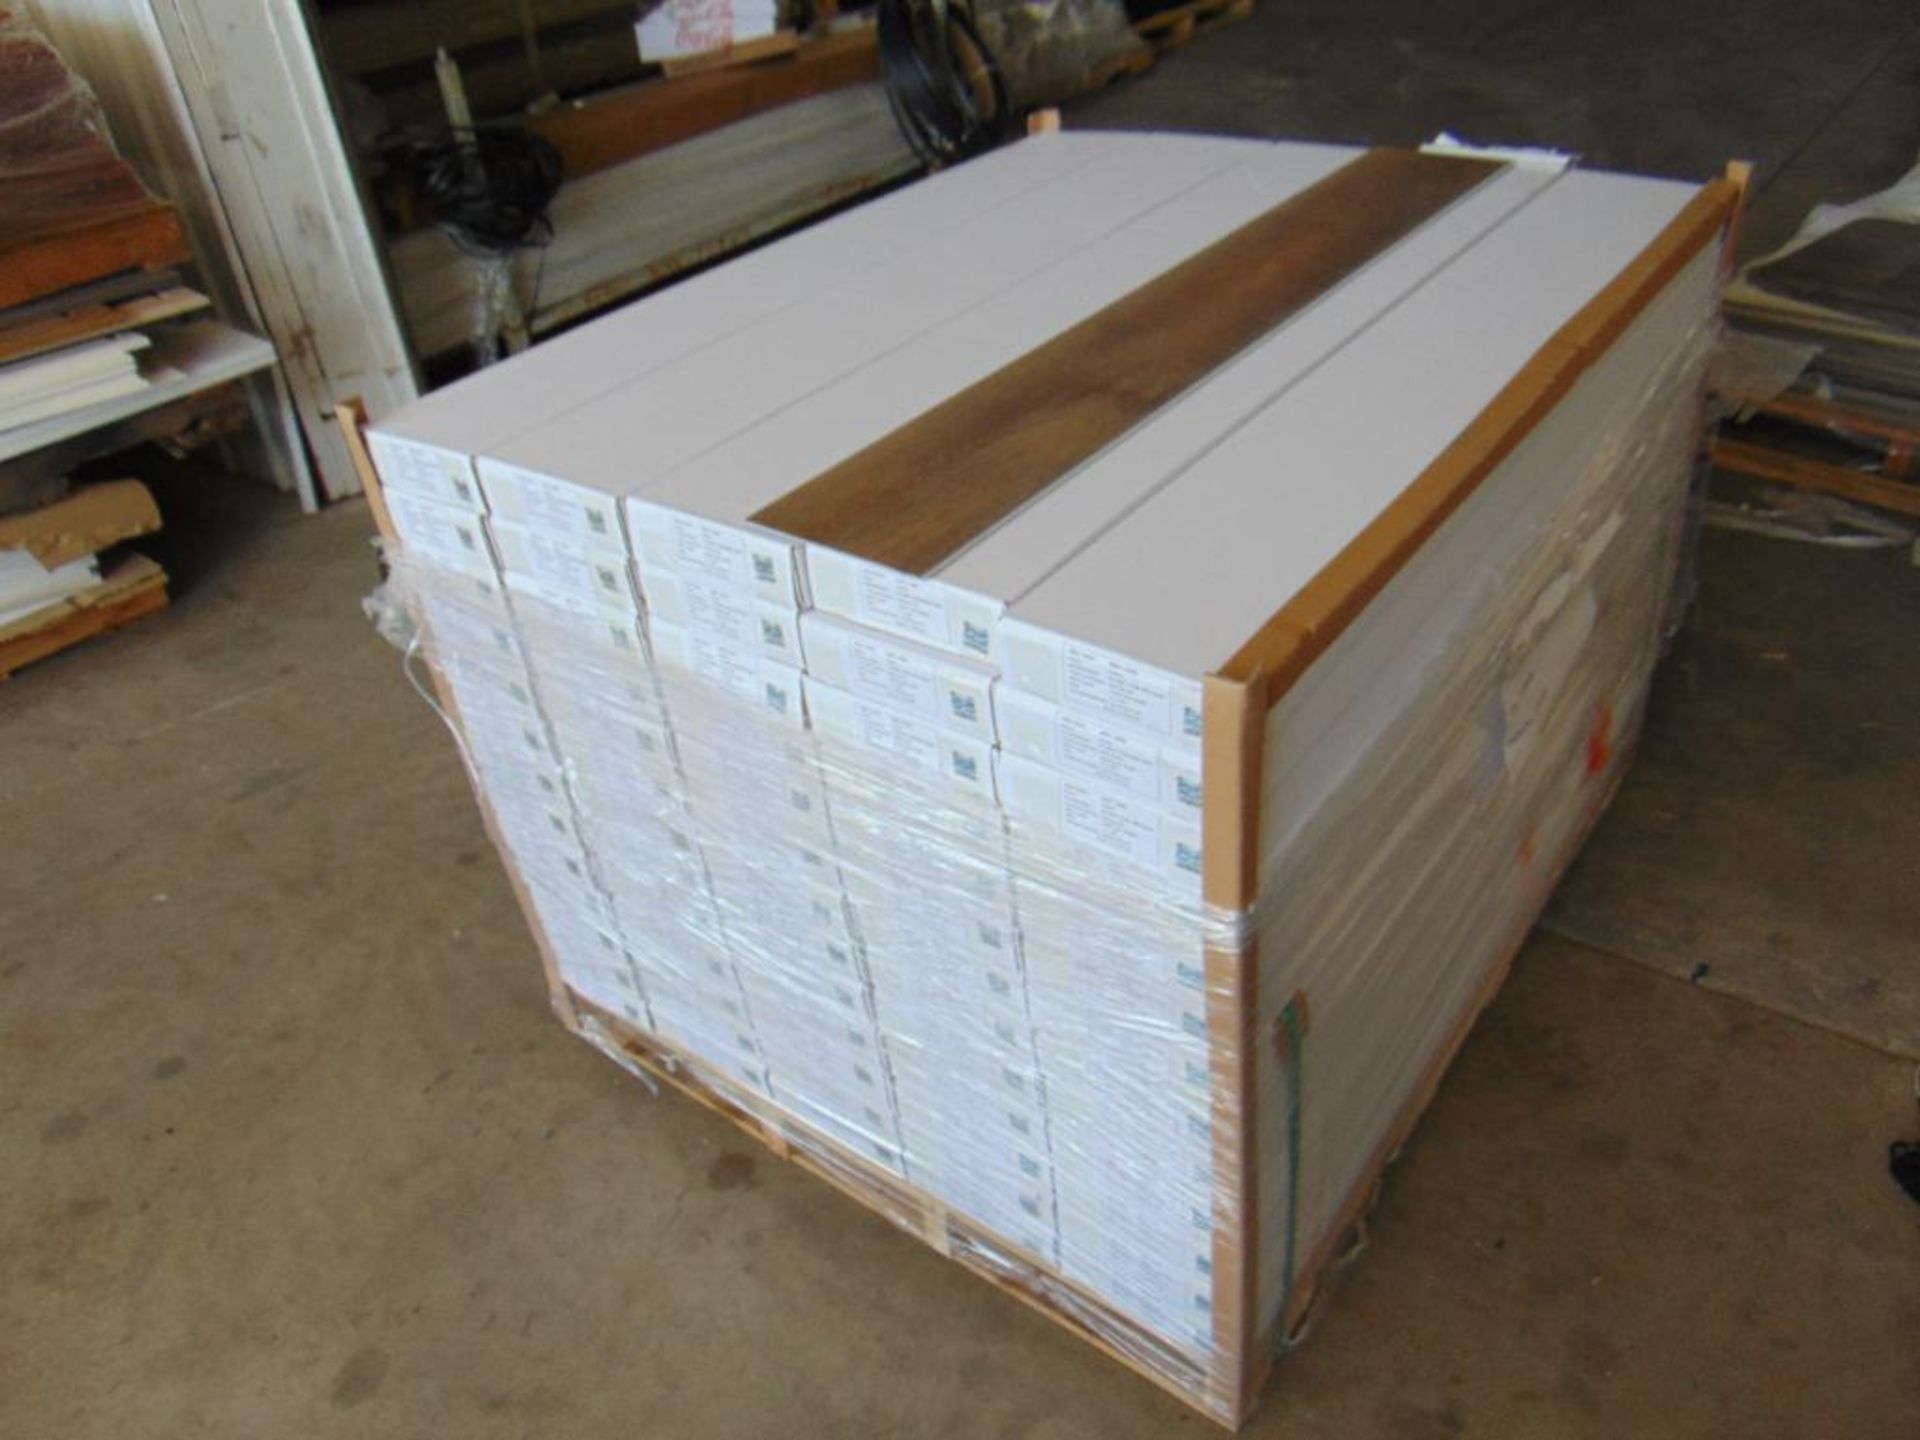 659.64 SF Waterproof Vinyl Plank - Next Level Toffee Snap Together Flooring